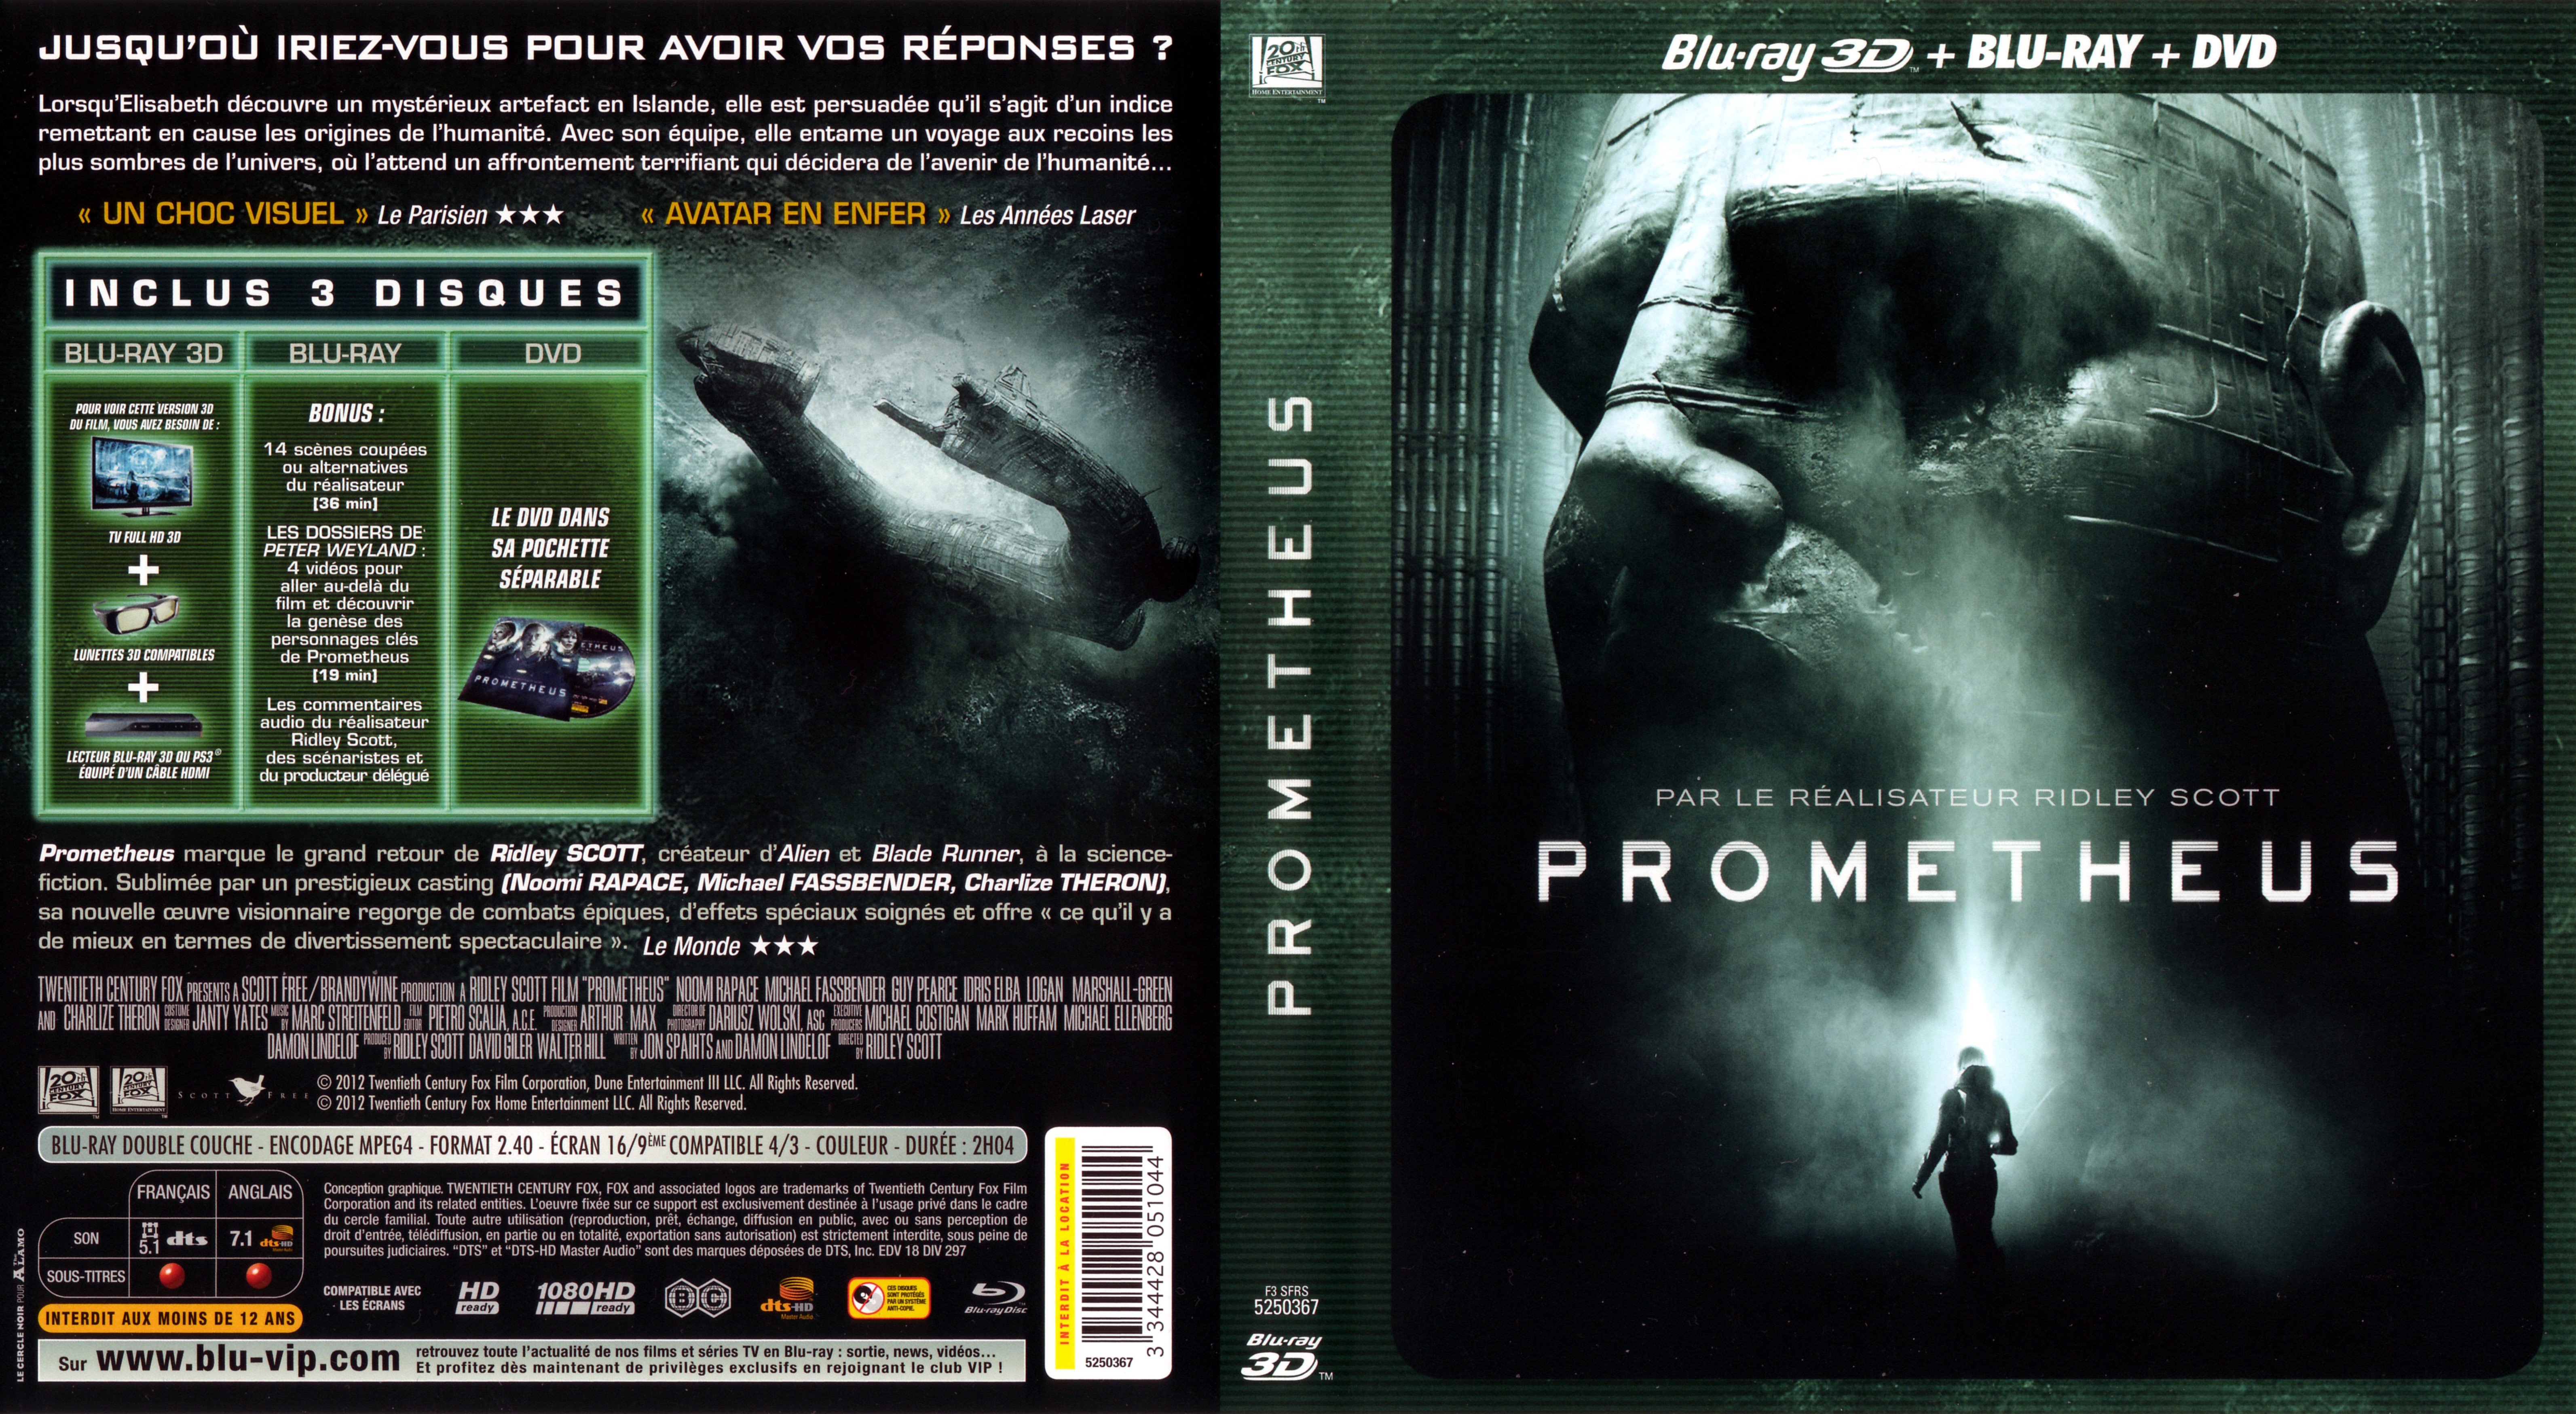 Jaquette DVD Prometheus 3D (BLU-RAY) v2